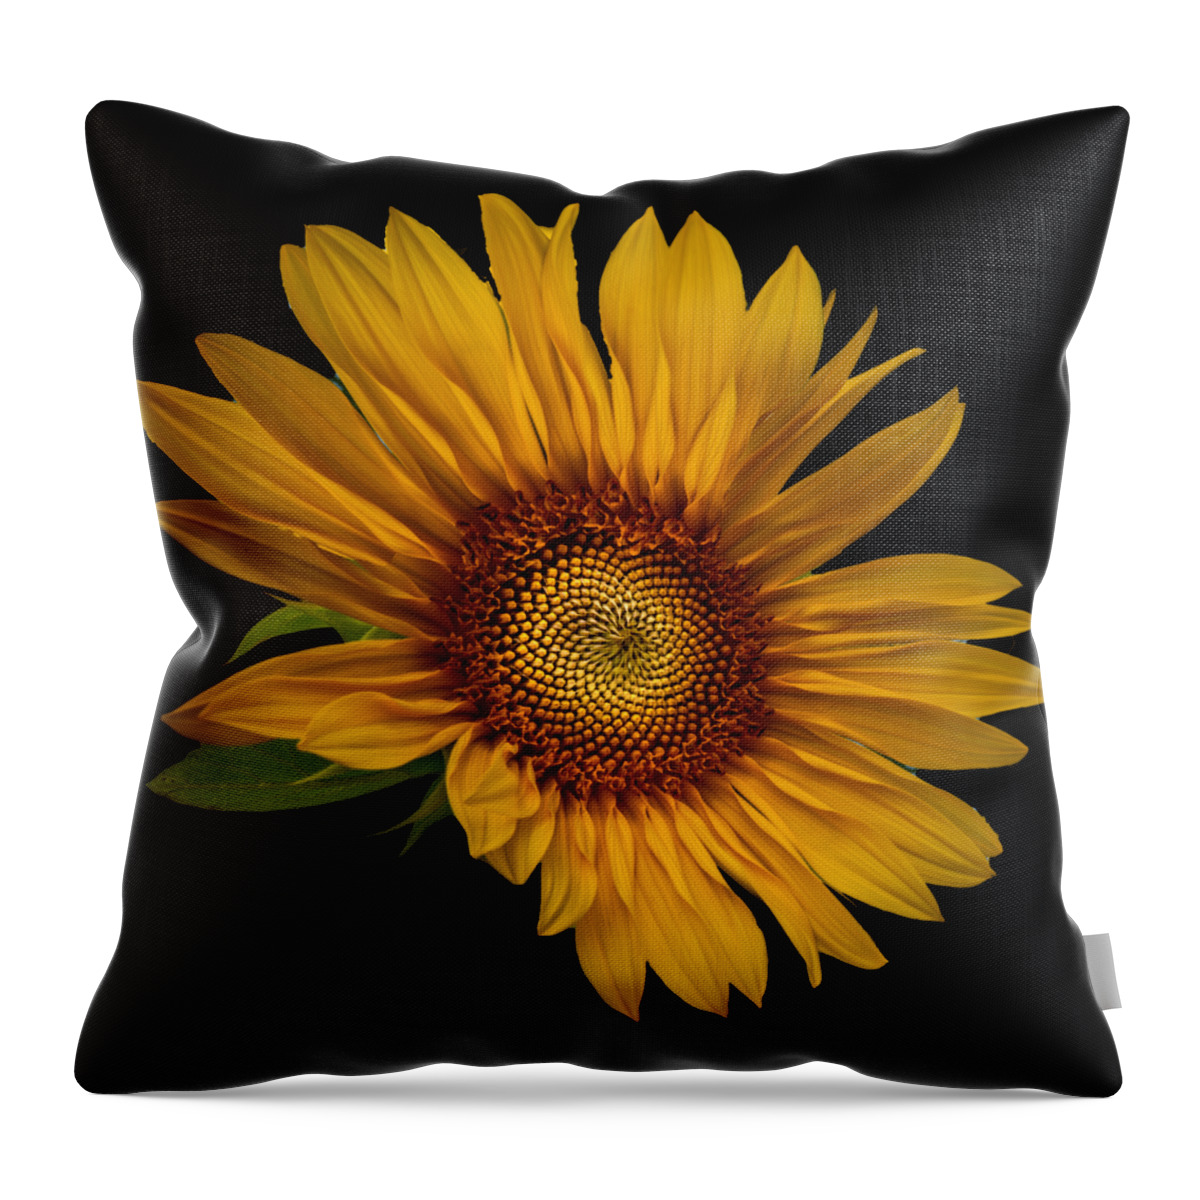 Art Throw Pillow featuring the photograph Big Sunflower by Debra and Dave Vanderlaan